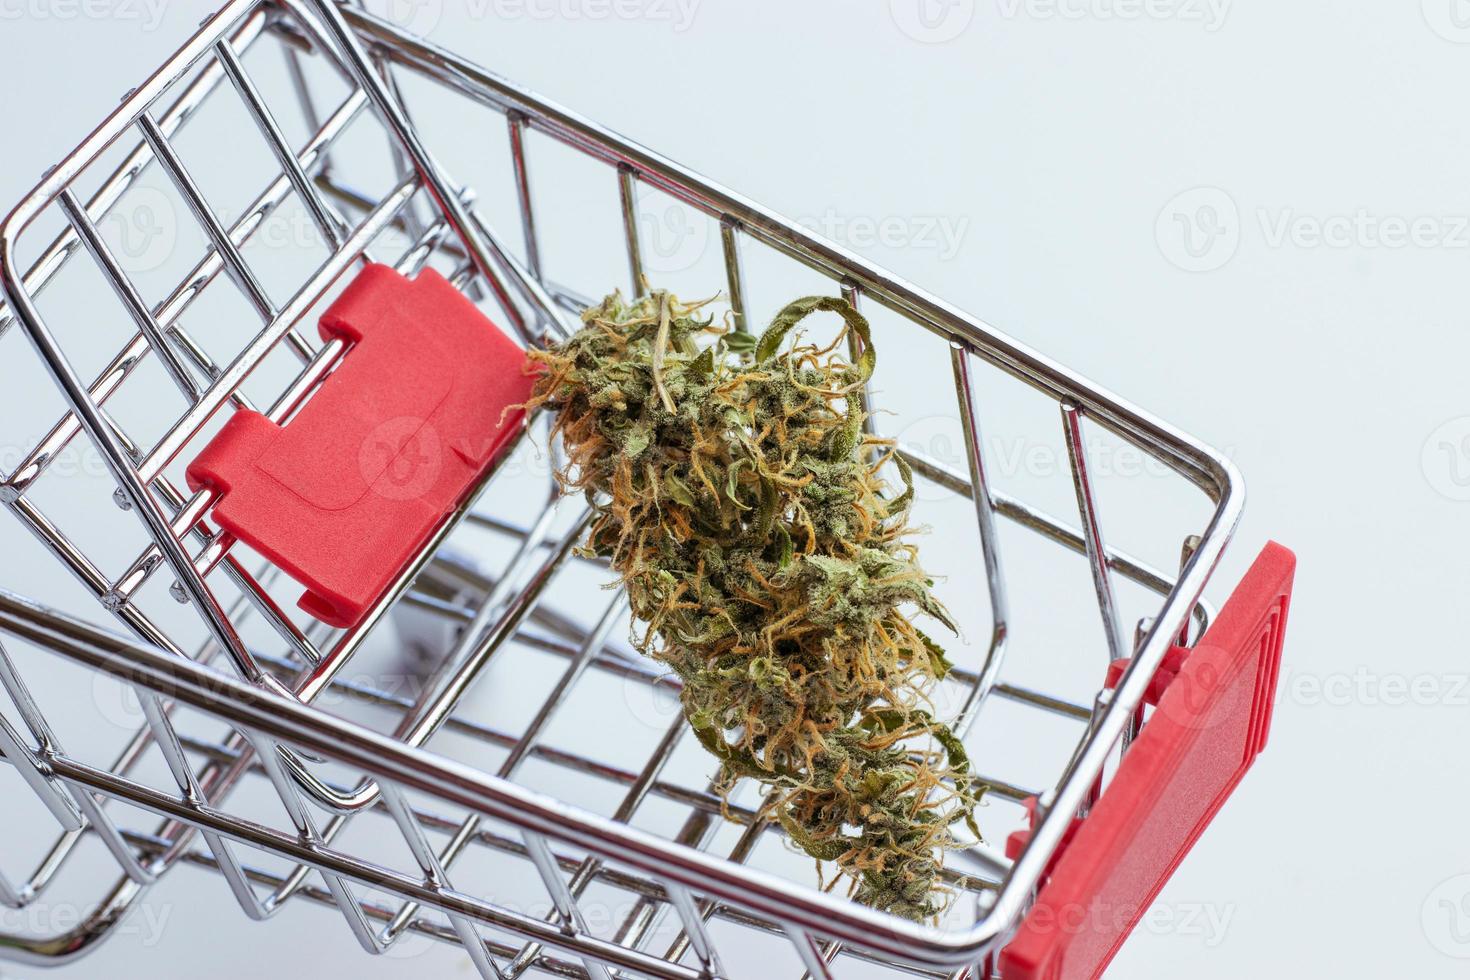 cannabis knopp i handla vagn på vit bakgrund foto